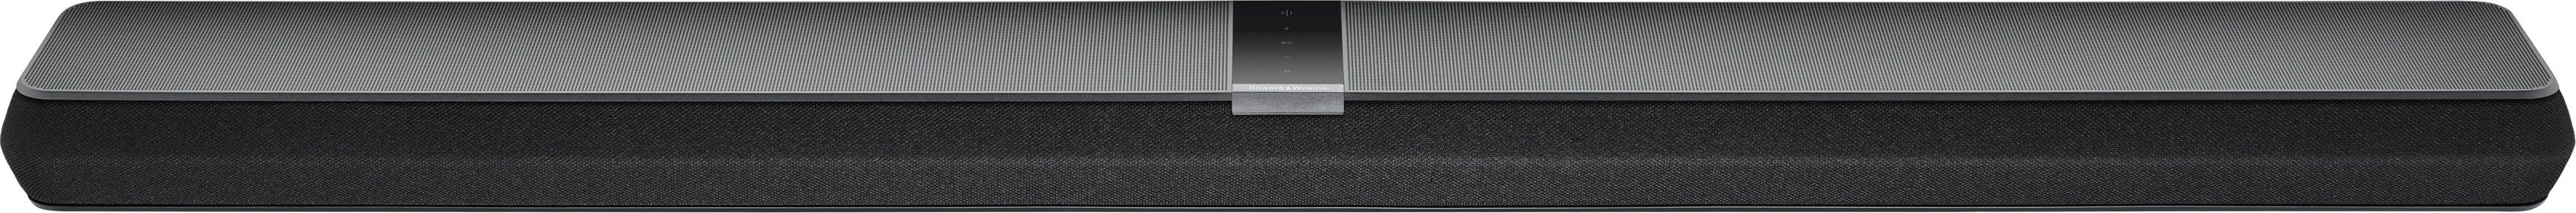 Bowers & Wilkins Panorama 3 Airplay Dolby Atmos, (aptX 2) 400 W, Bluetooth, Soundbar 3.1.2 Wireless